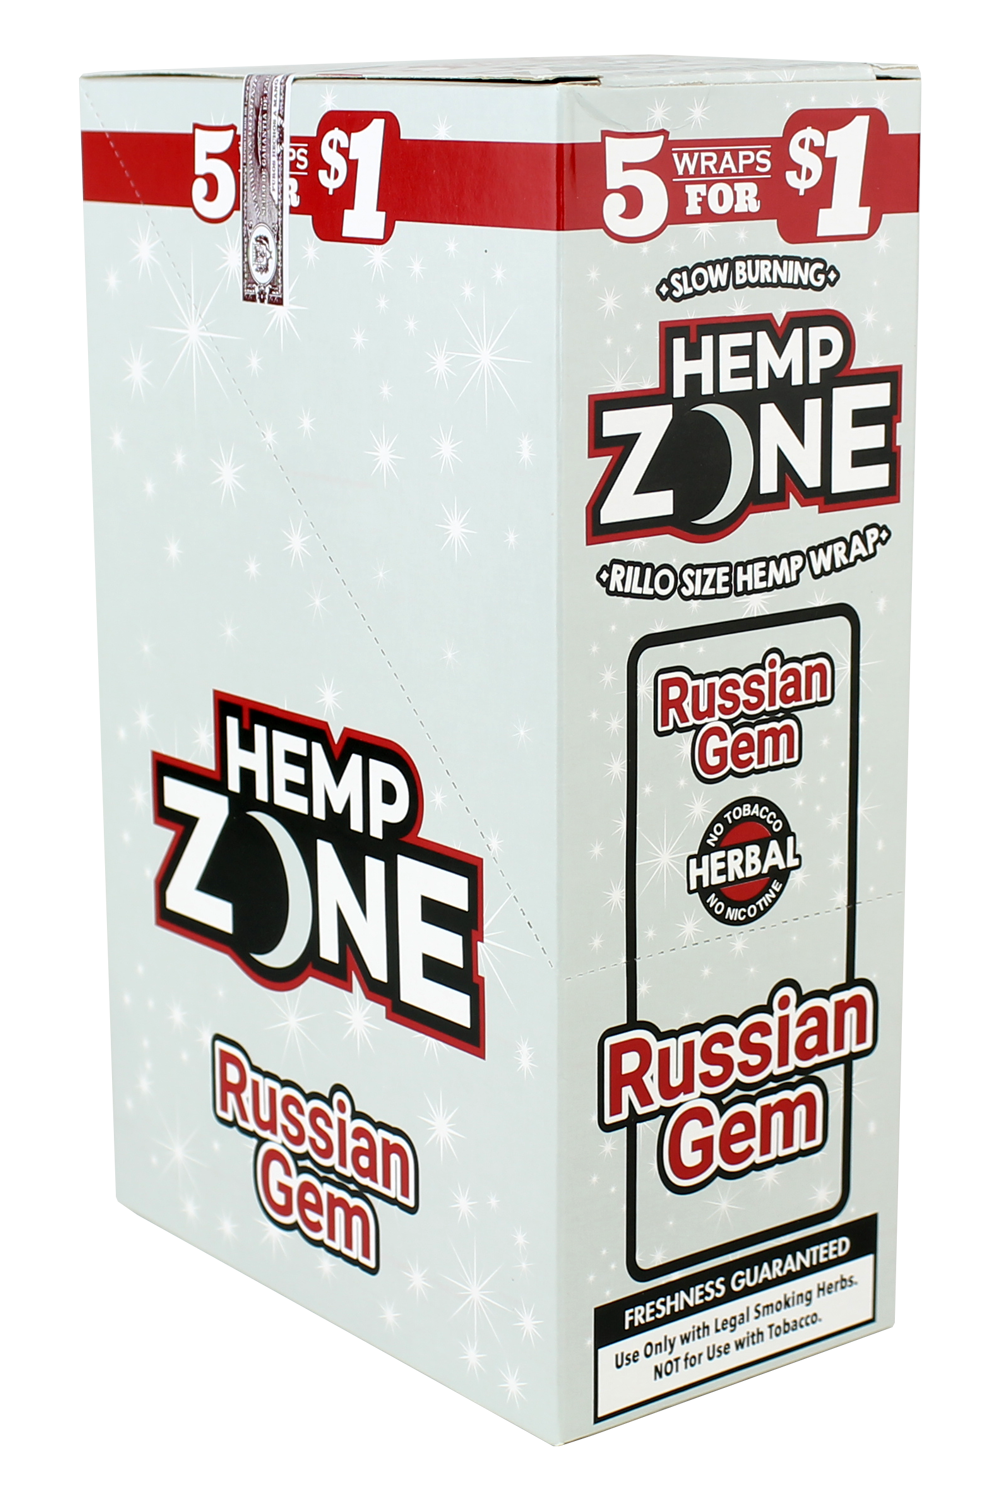 New hemp wrap flavor Russian 